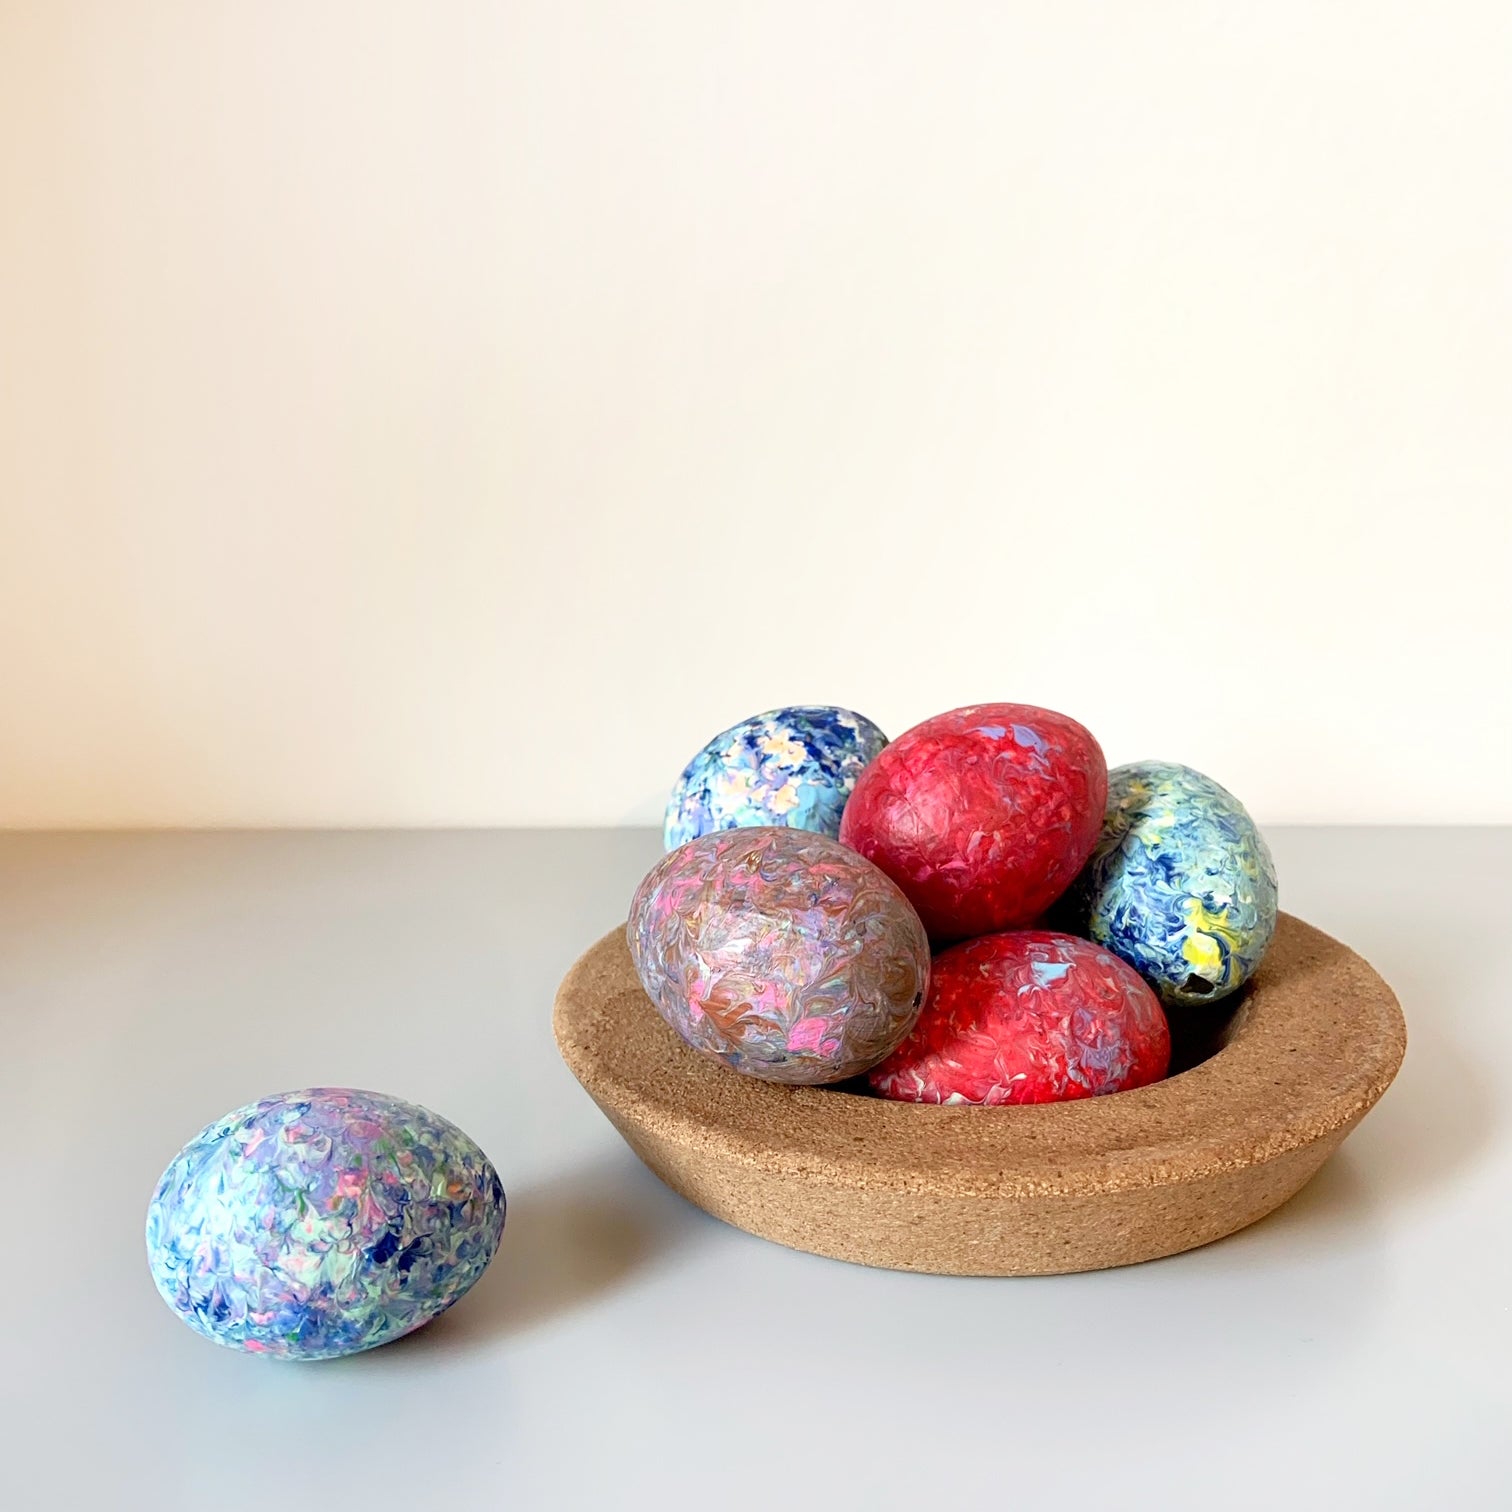 Eier mit Acrylfarbe marmoriert